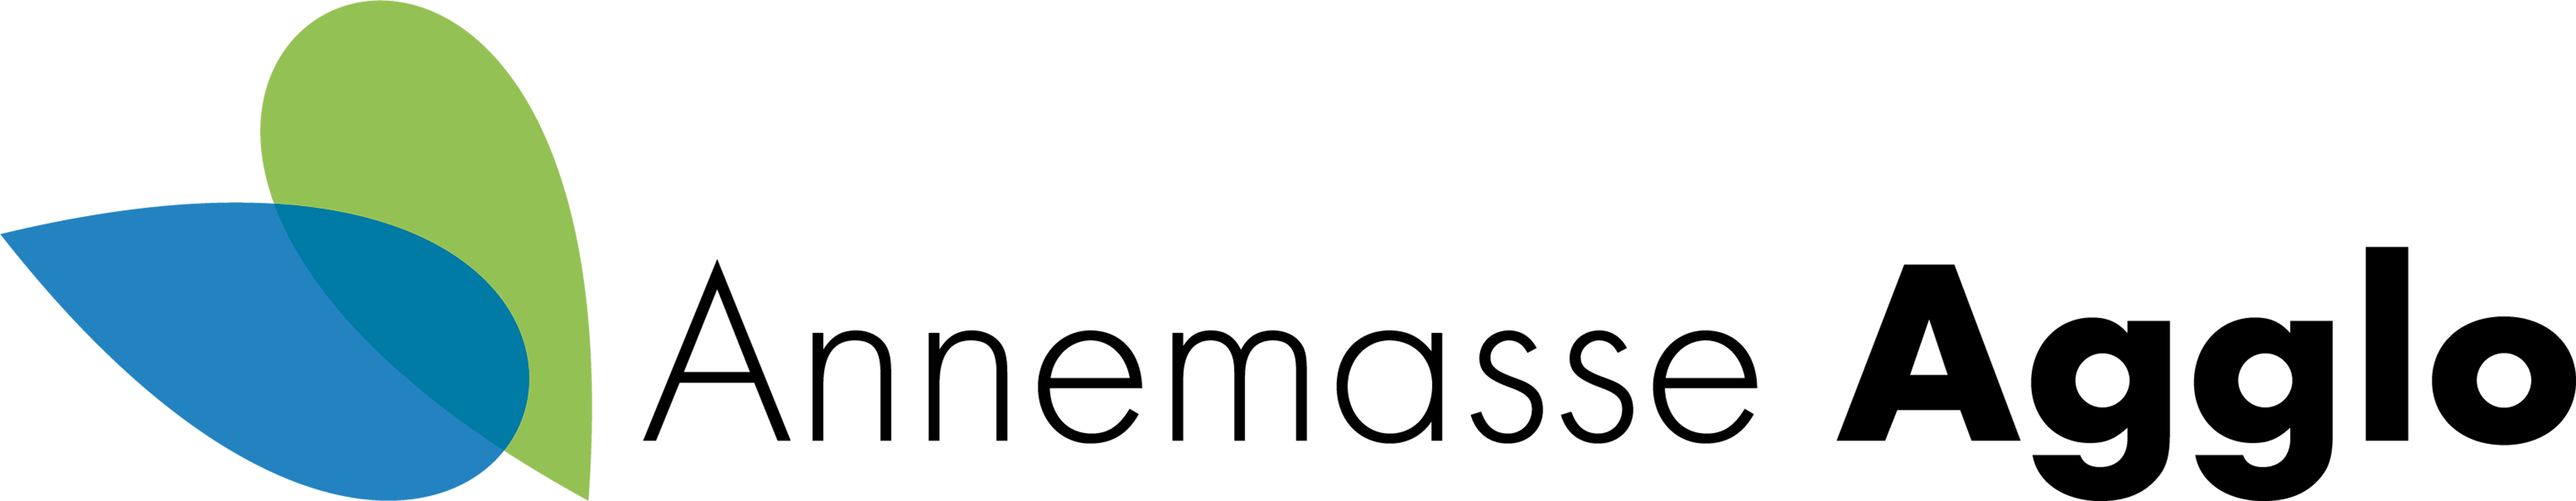 Logo Annemasse Agglo